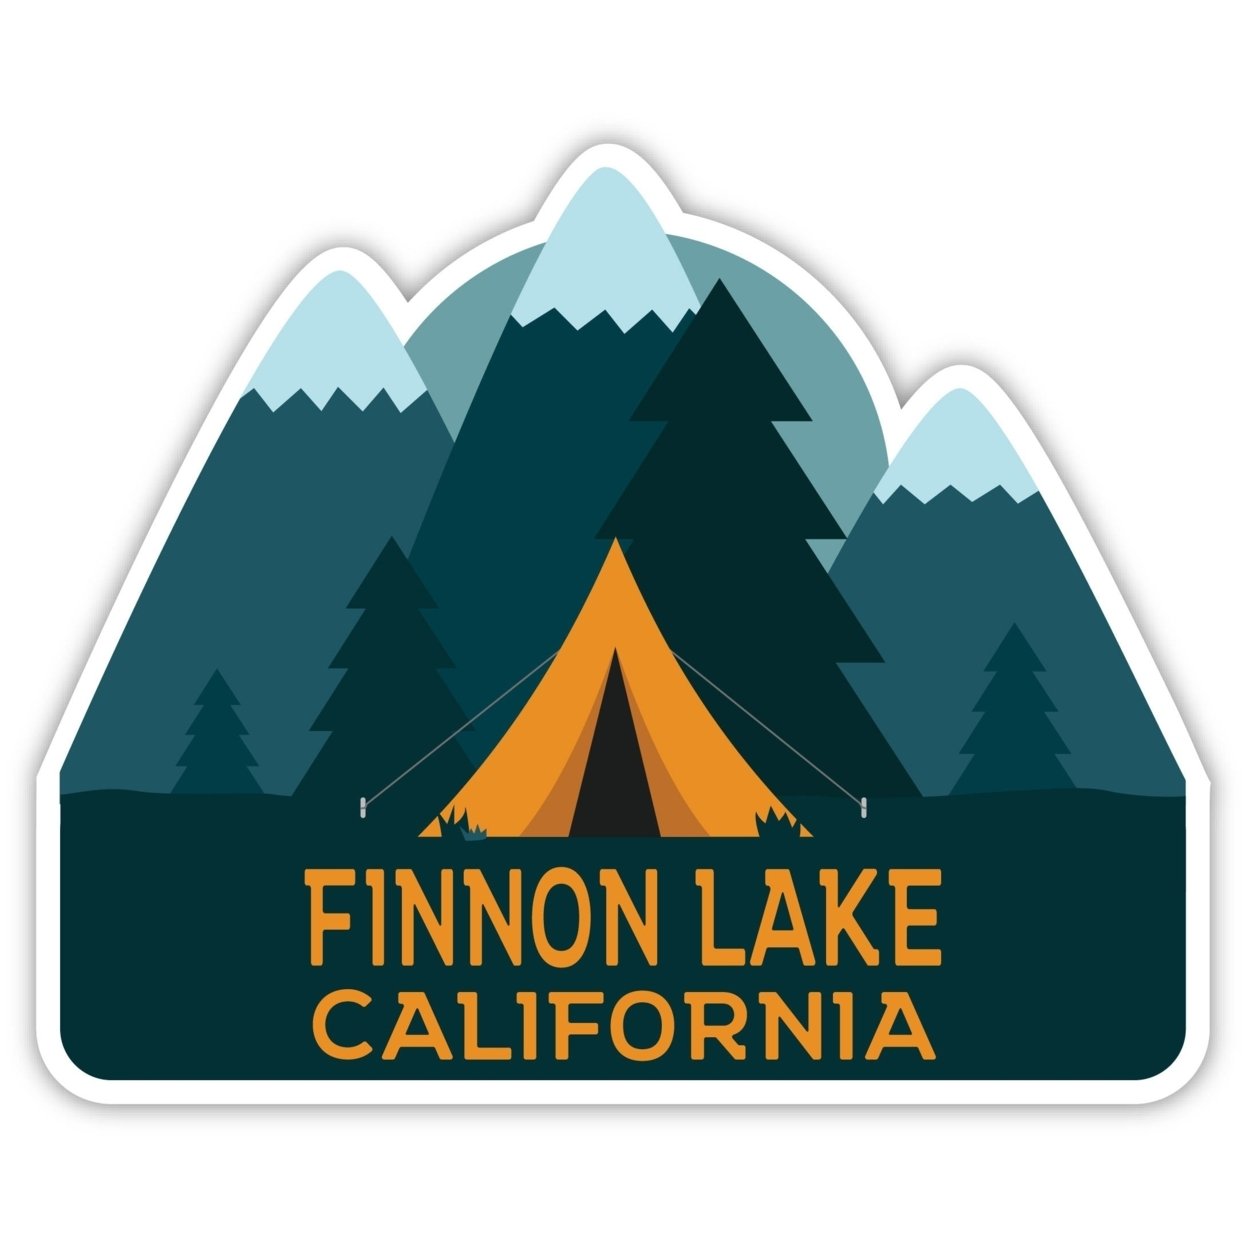 Finnon Lake California Souvenir Decorative Stickers (Choose Theme And Size) - 4-Pack, 12-Inch, Tent